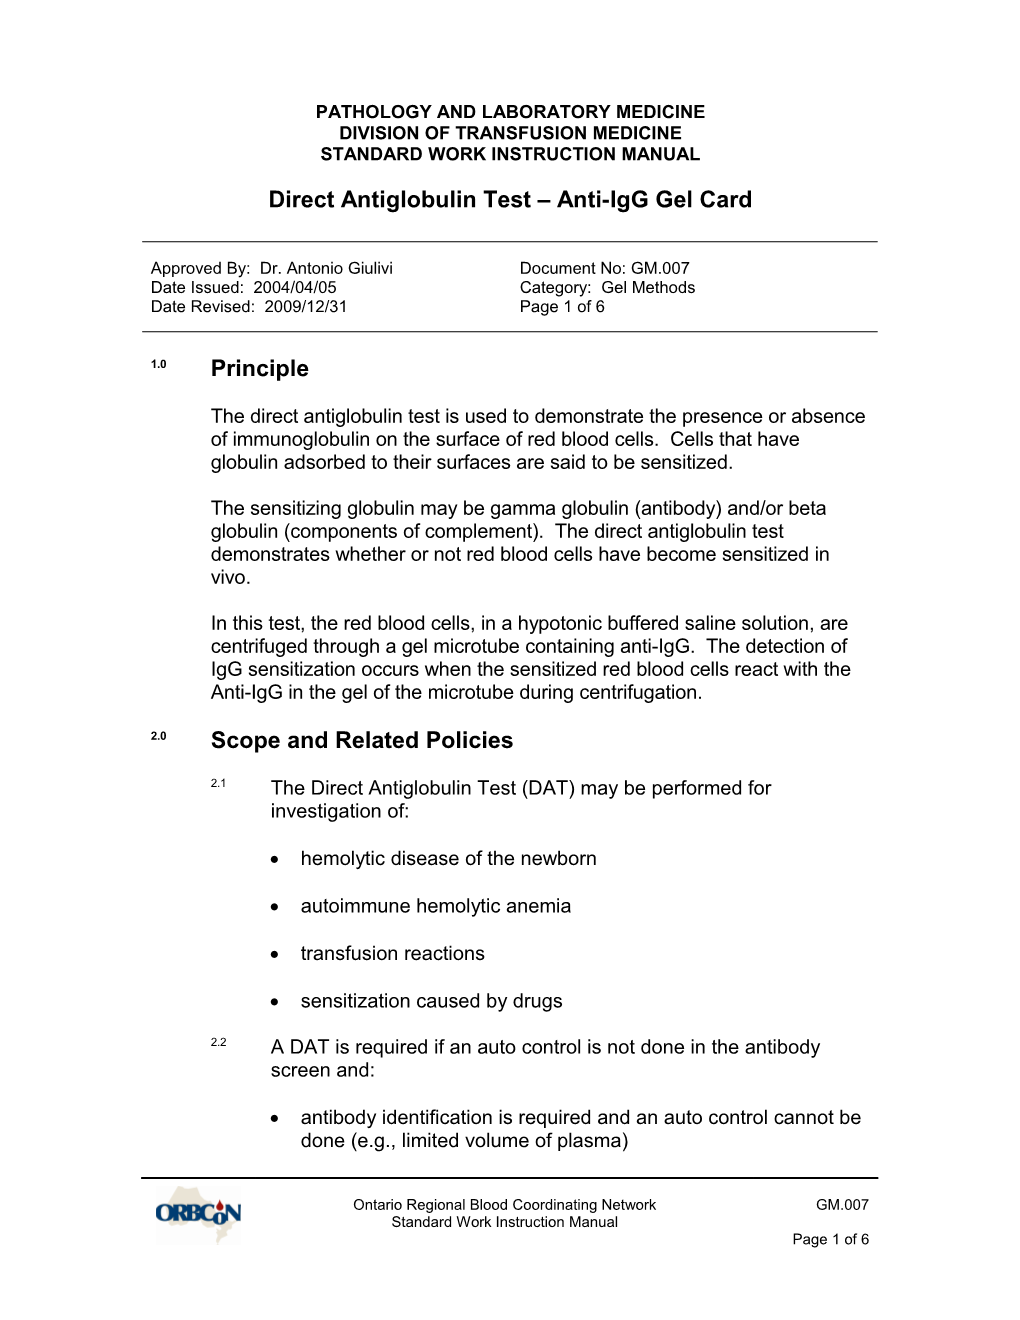 GM.009 Direct Antiglobulin Test - Anti-Igg Gel Card